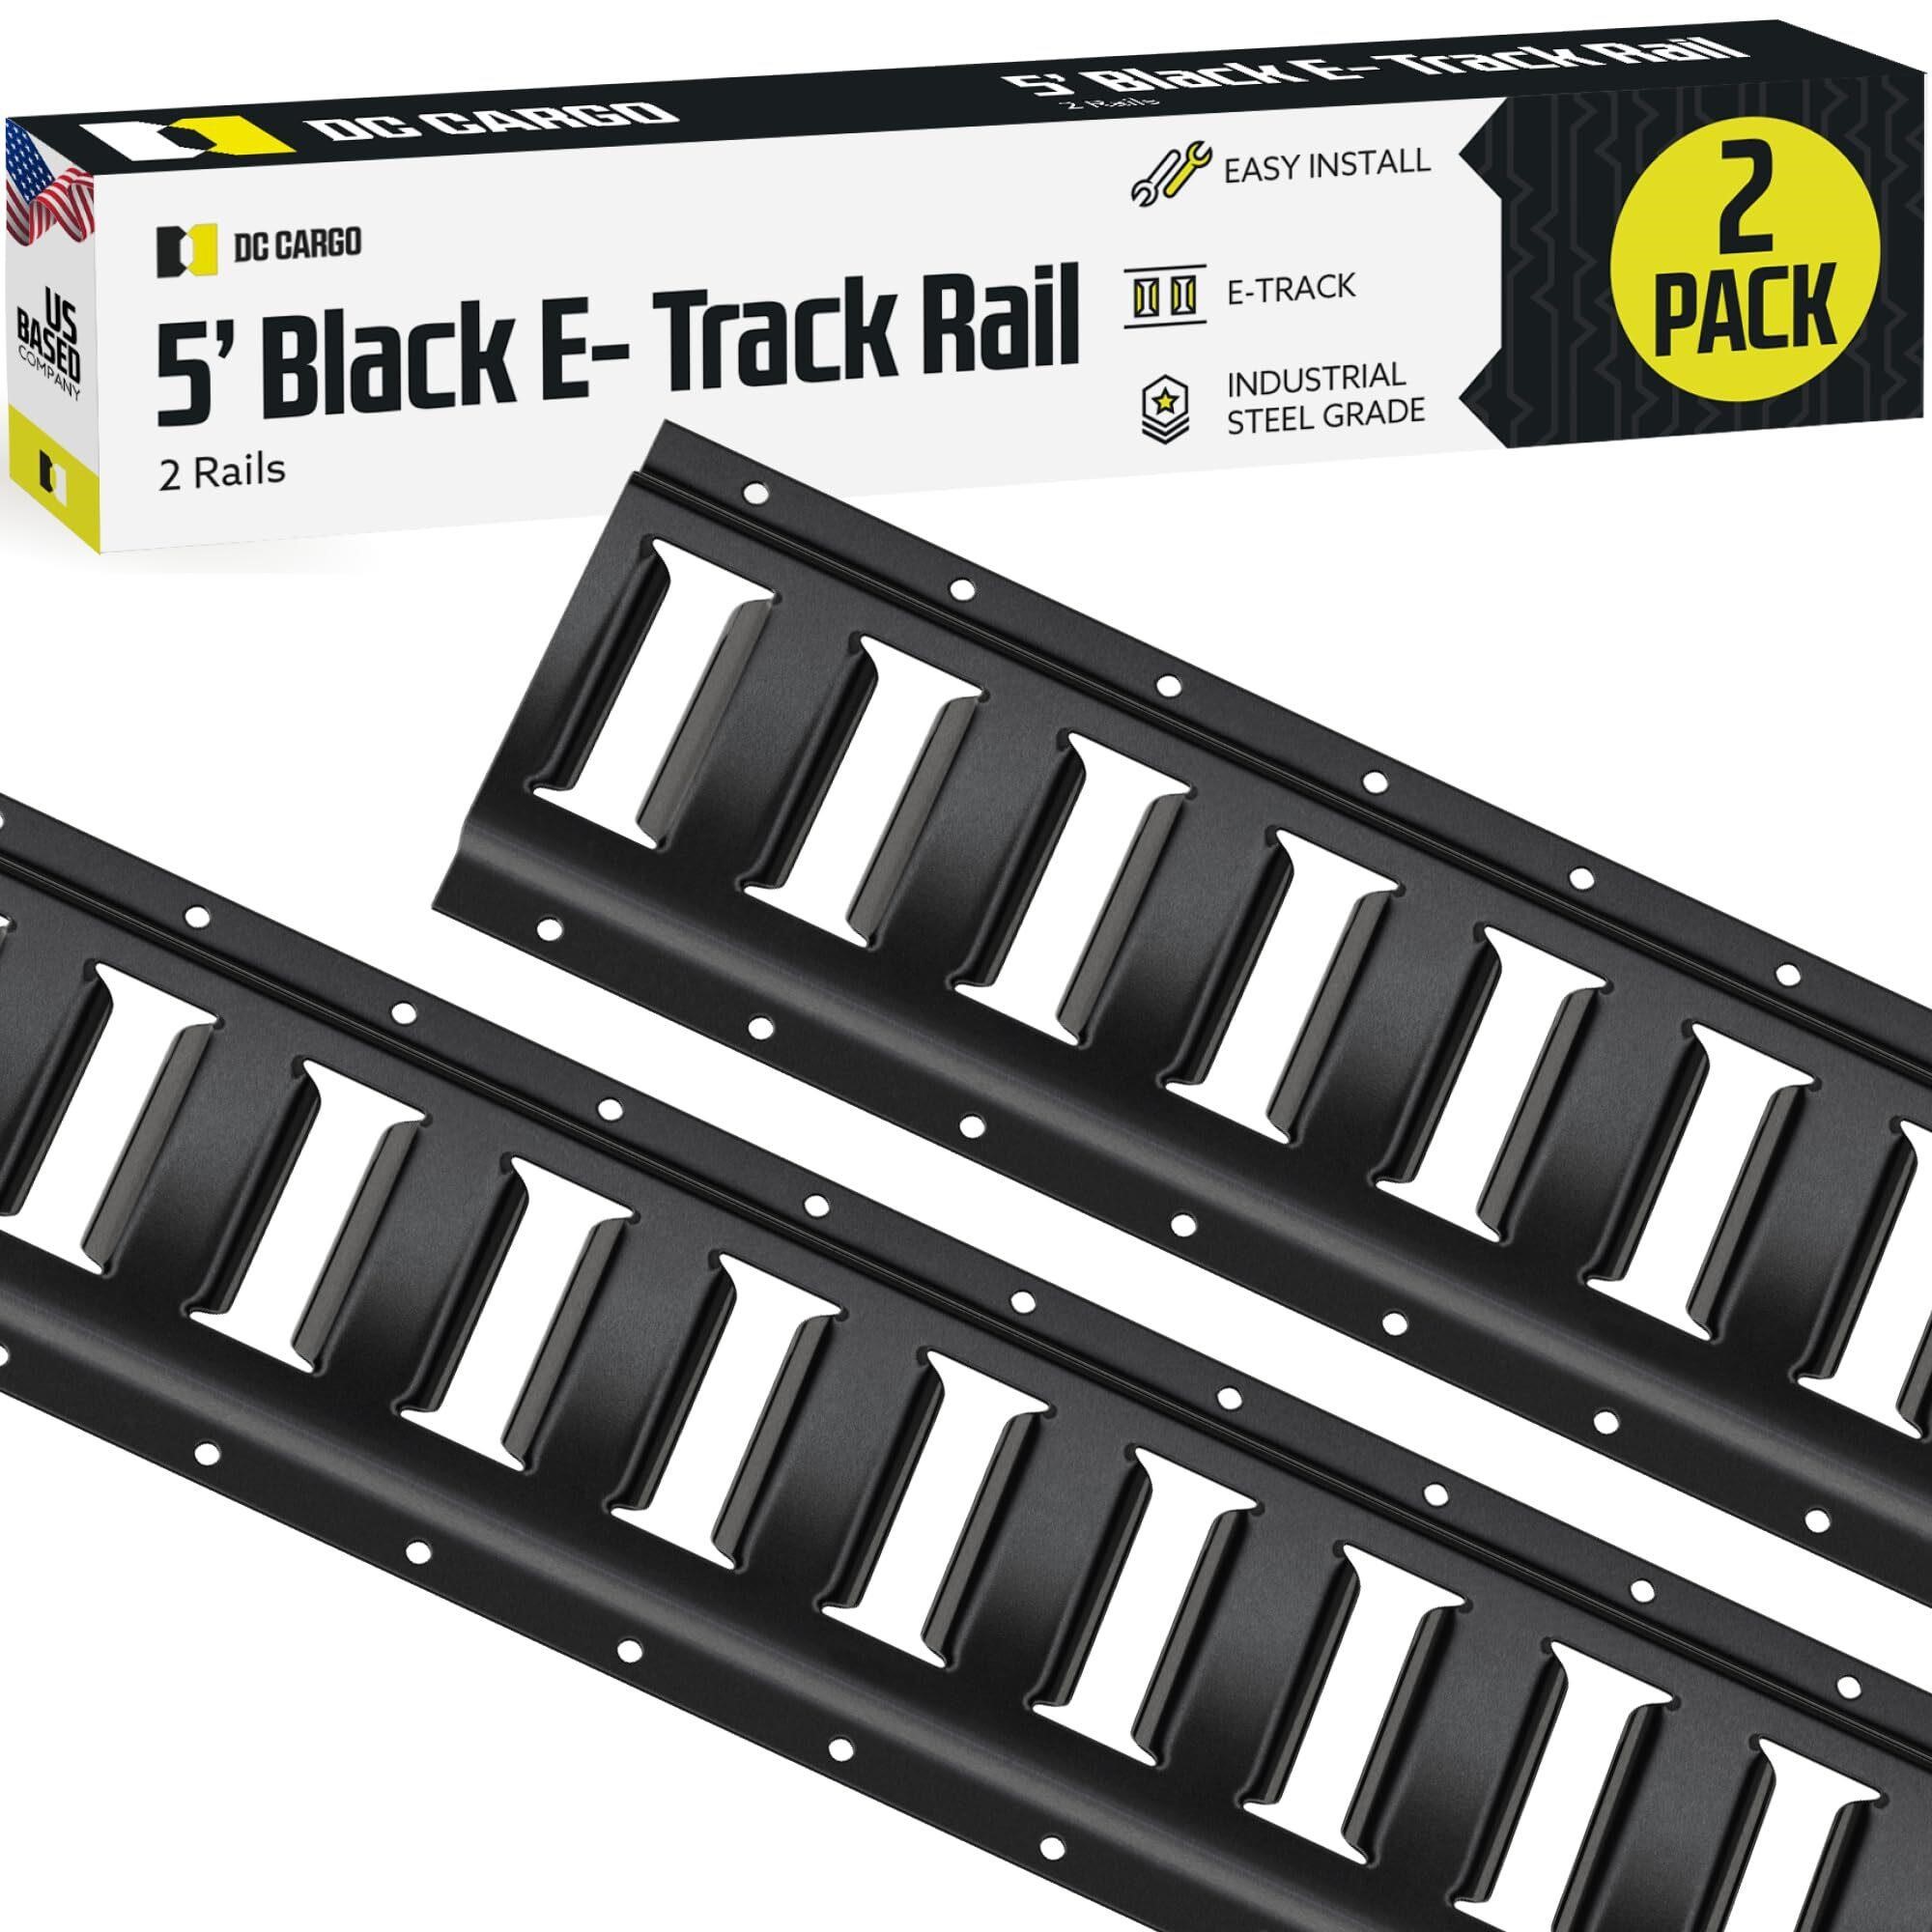 E Track Tie Down Rail Kit 5' (2 Pack) for Garages,